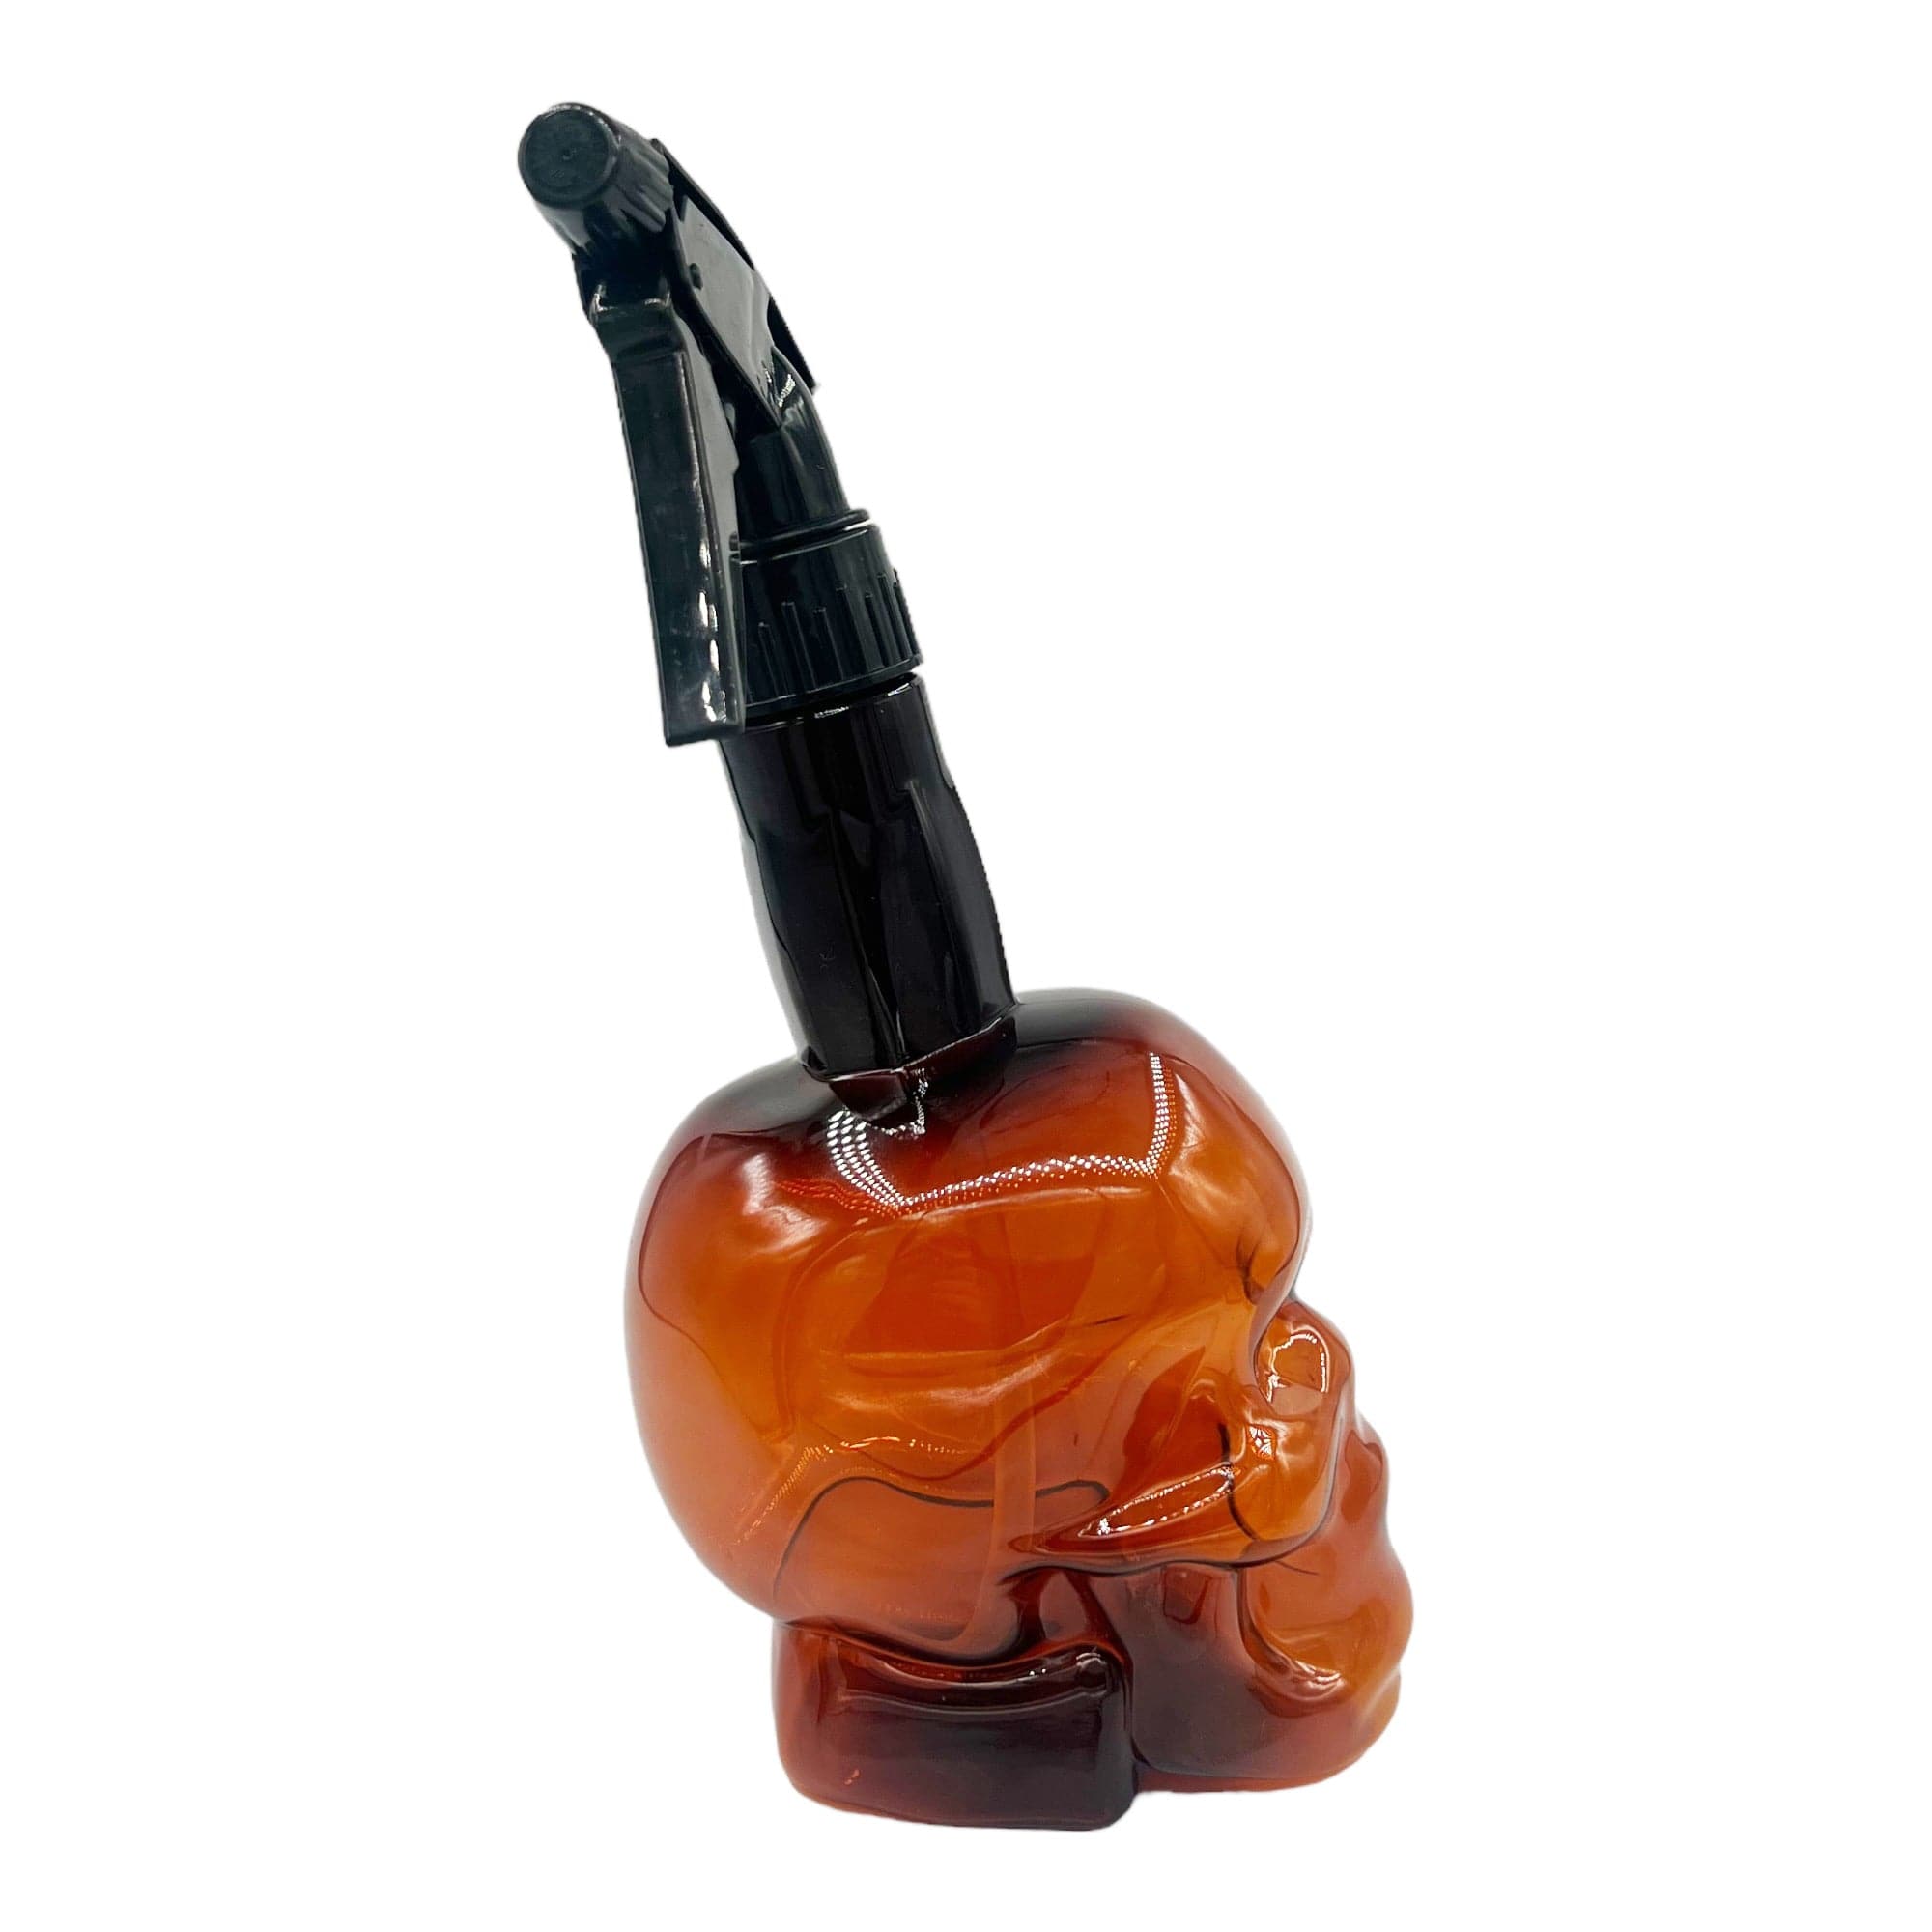 Eson - Water Spray Bottle 500ml Extreme Mist Sprayer Skull Style (Amber)